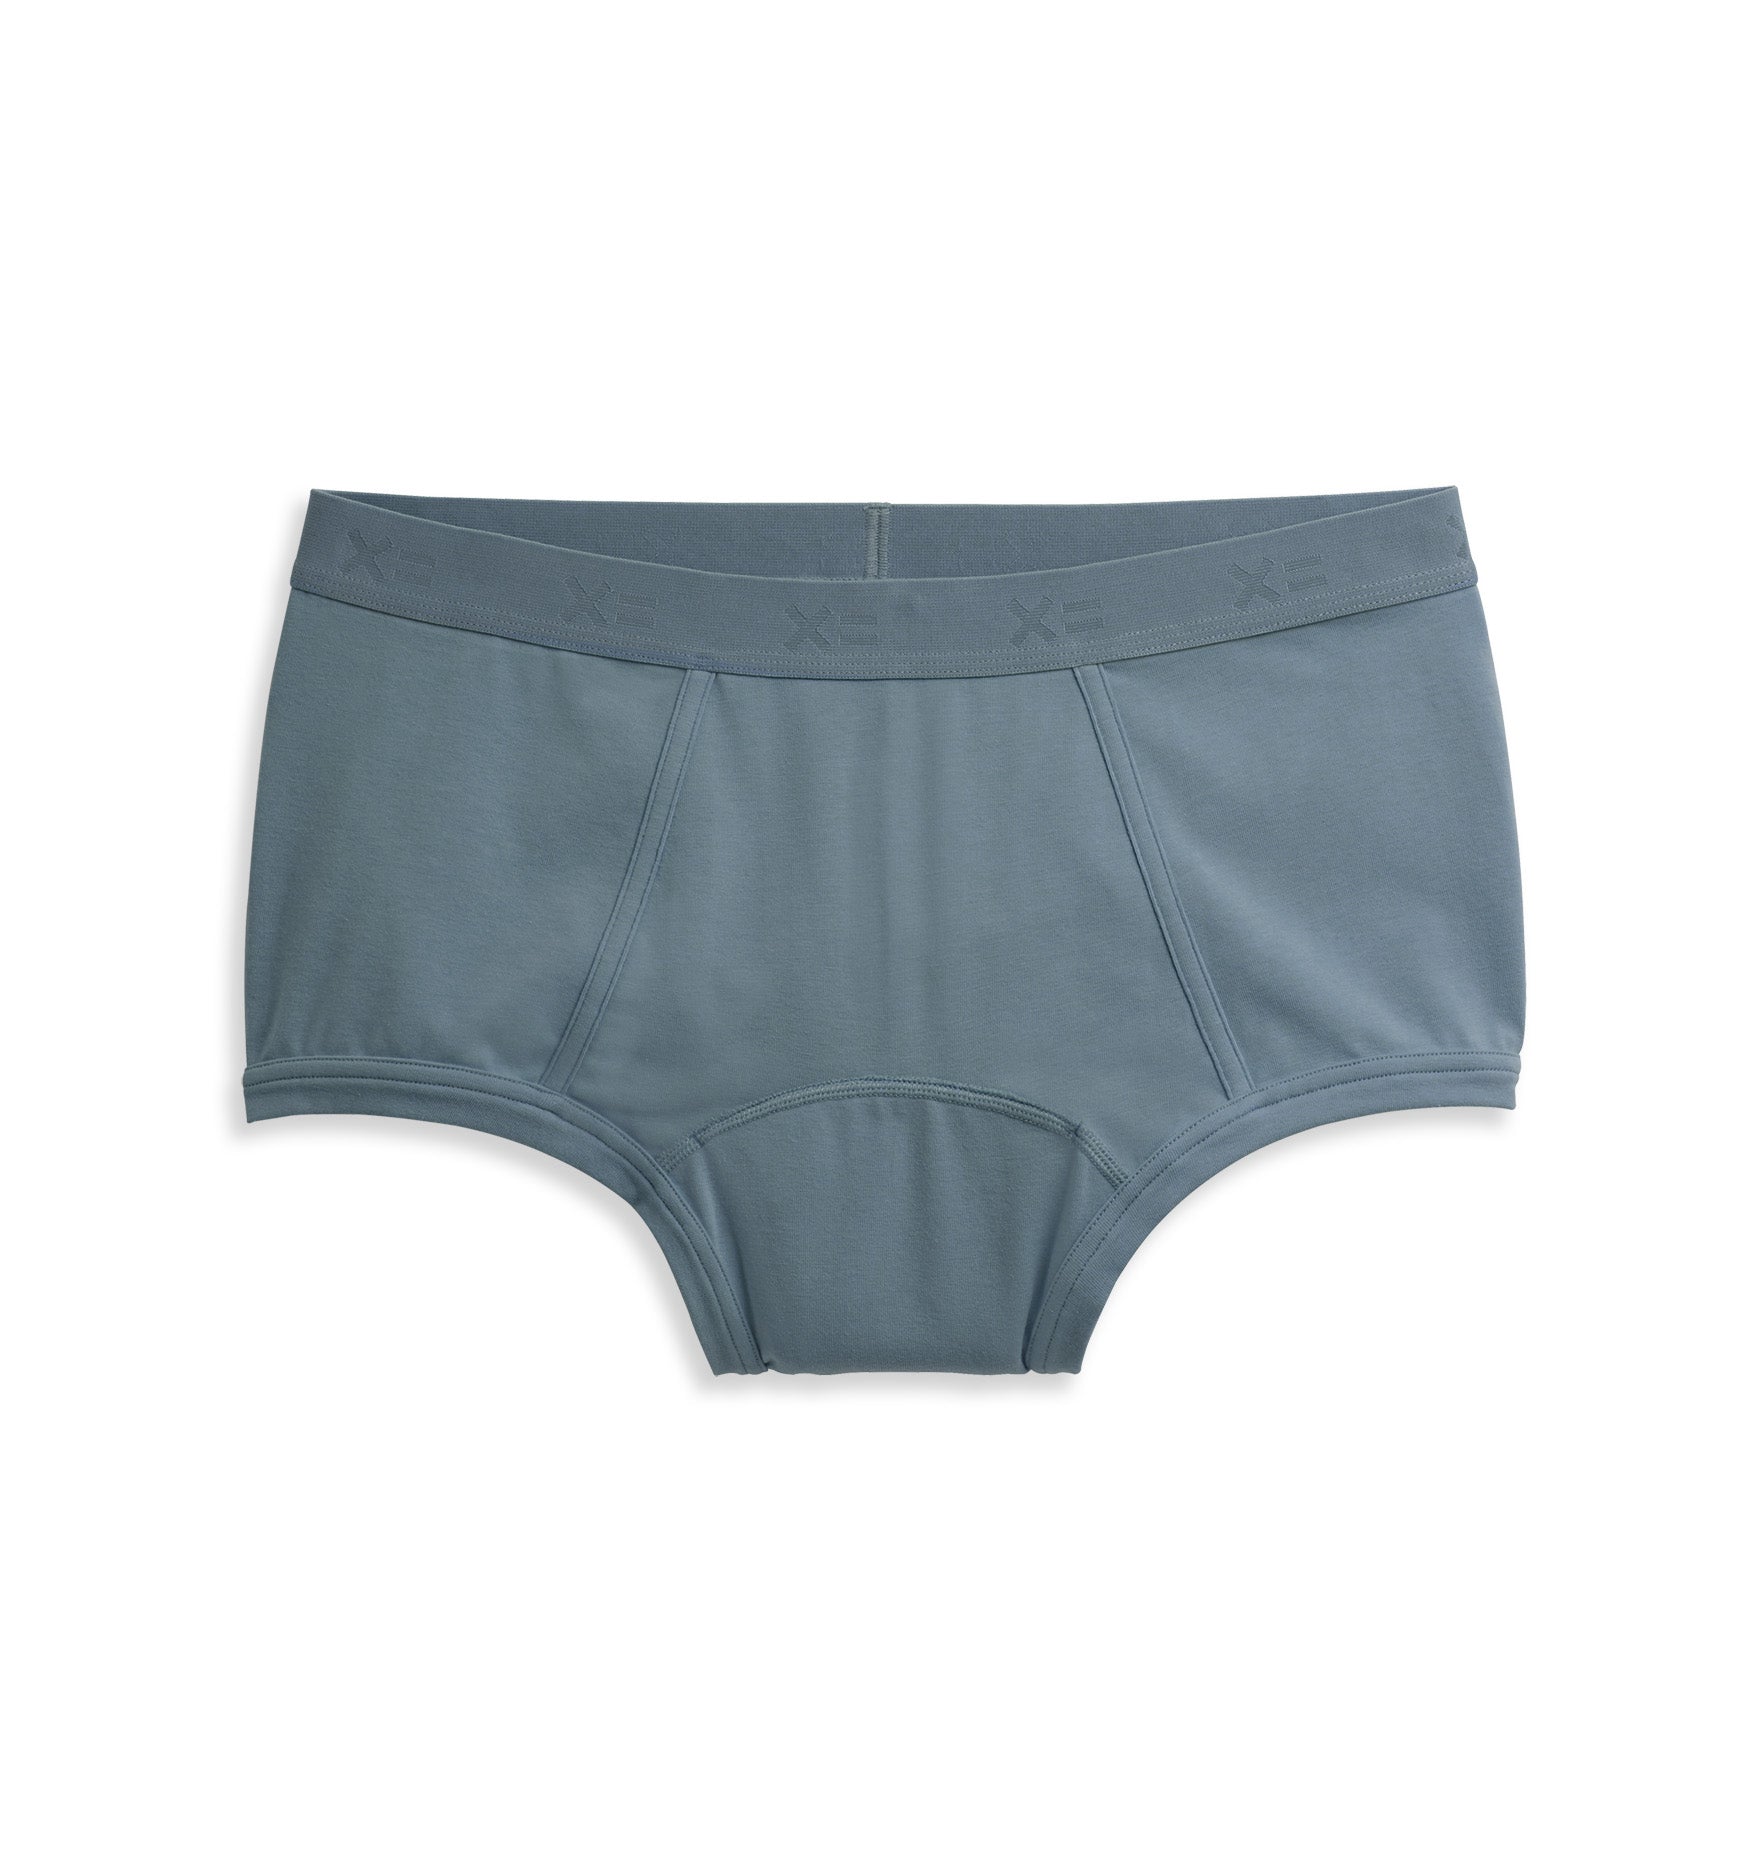 TomboyX Boy Short Underwear, Organic Cotton Rib Stretch Comfortable Boxer  Briefs (XS-6X) Black XXX Large